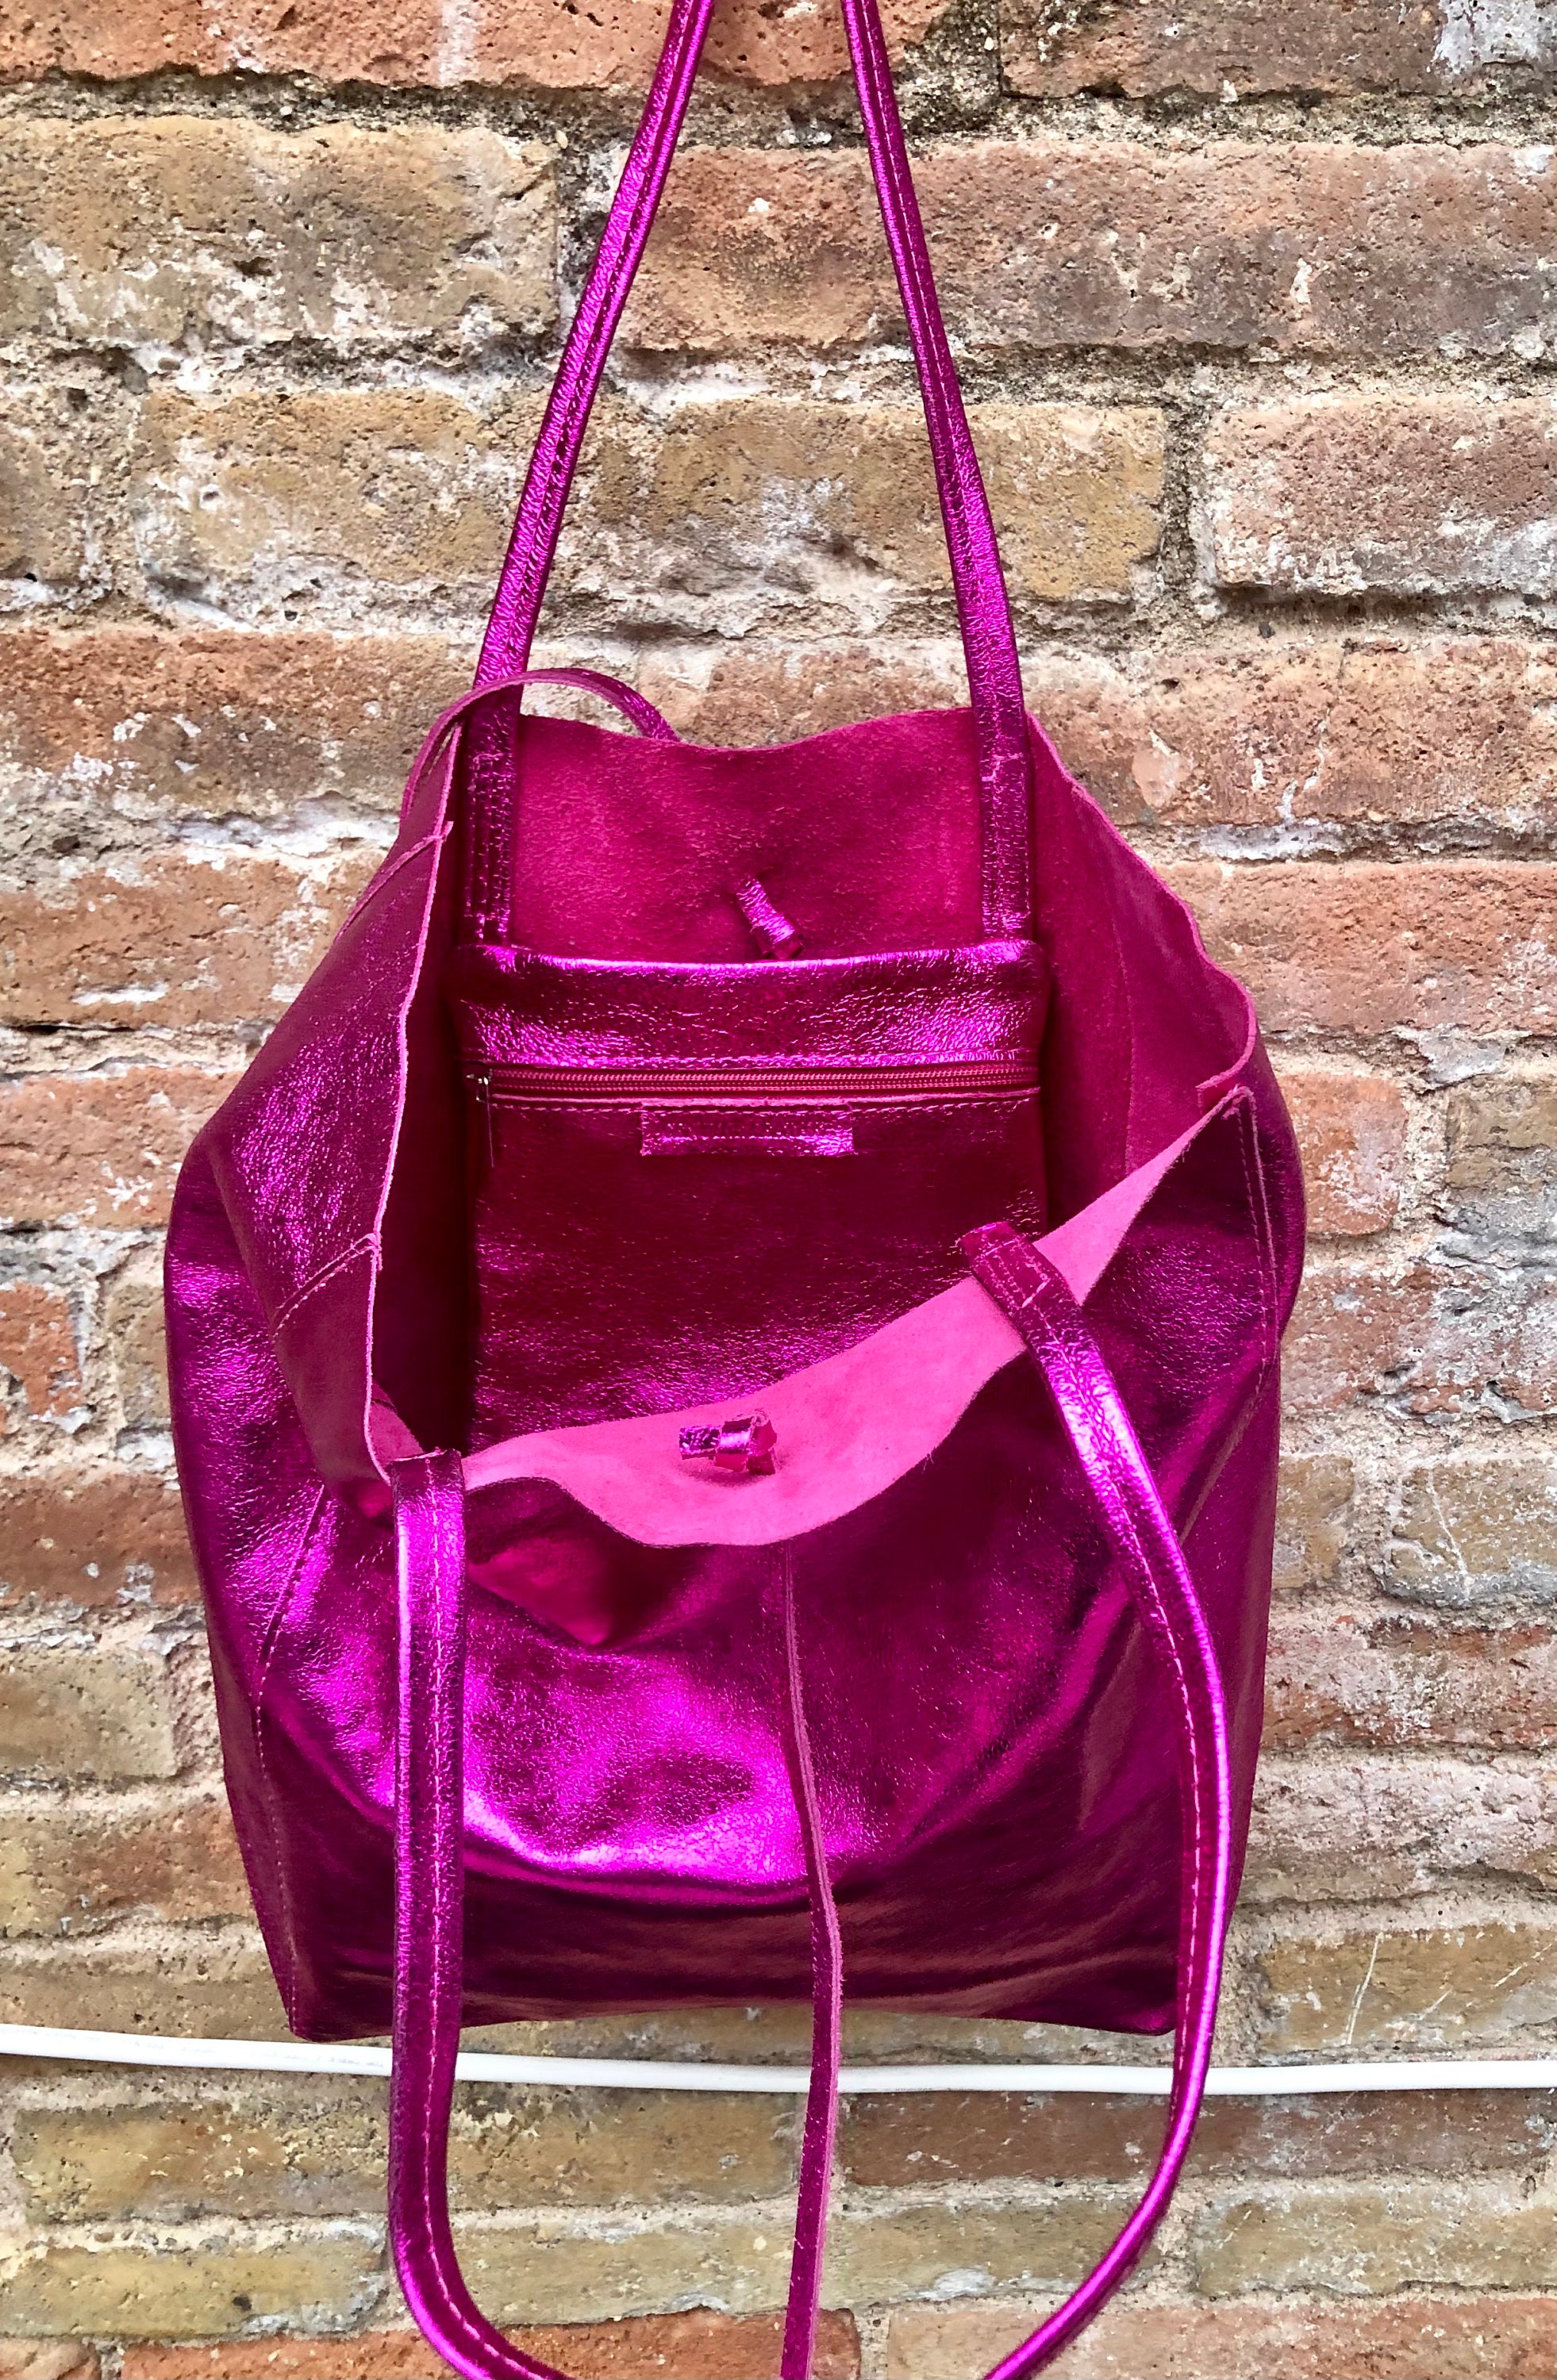 Tote Leather Bag in Fuchsia Pink. GENUINE Metallic Leather 